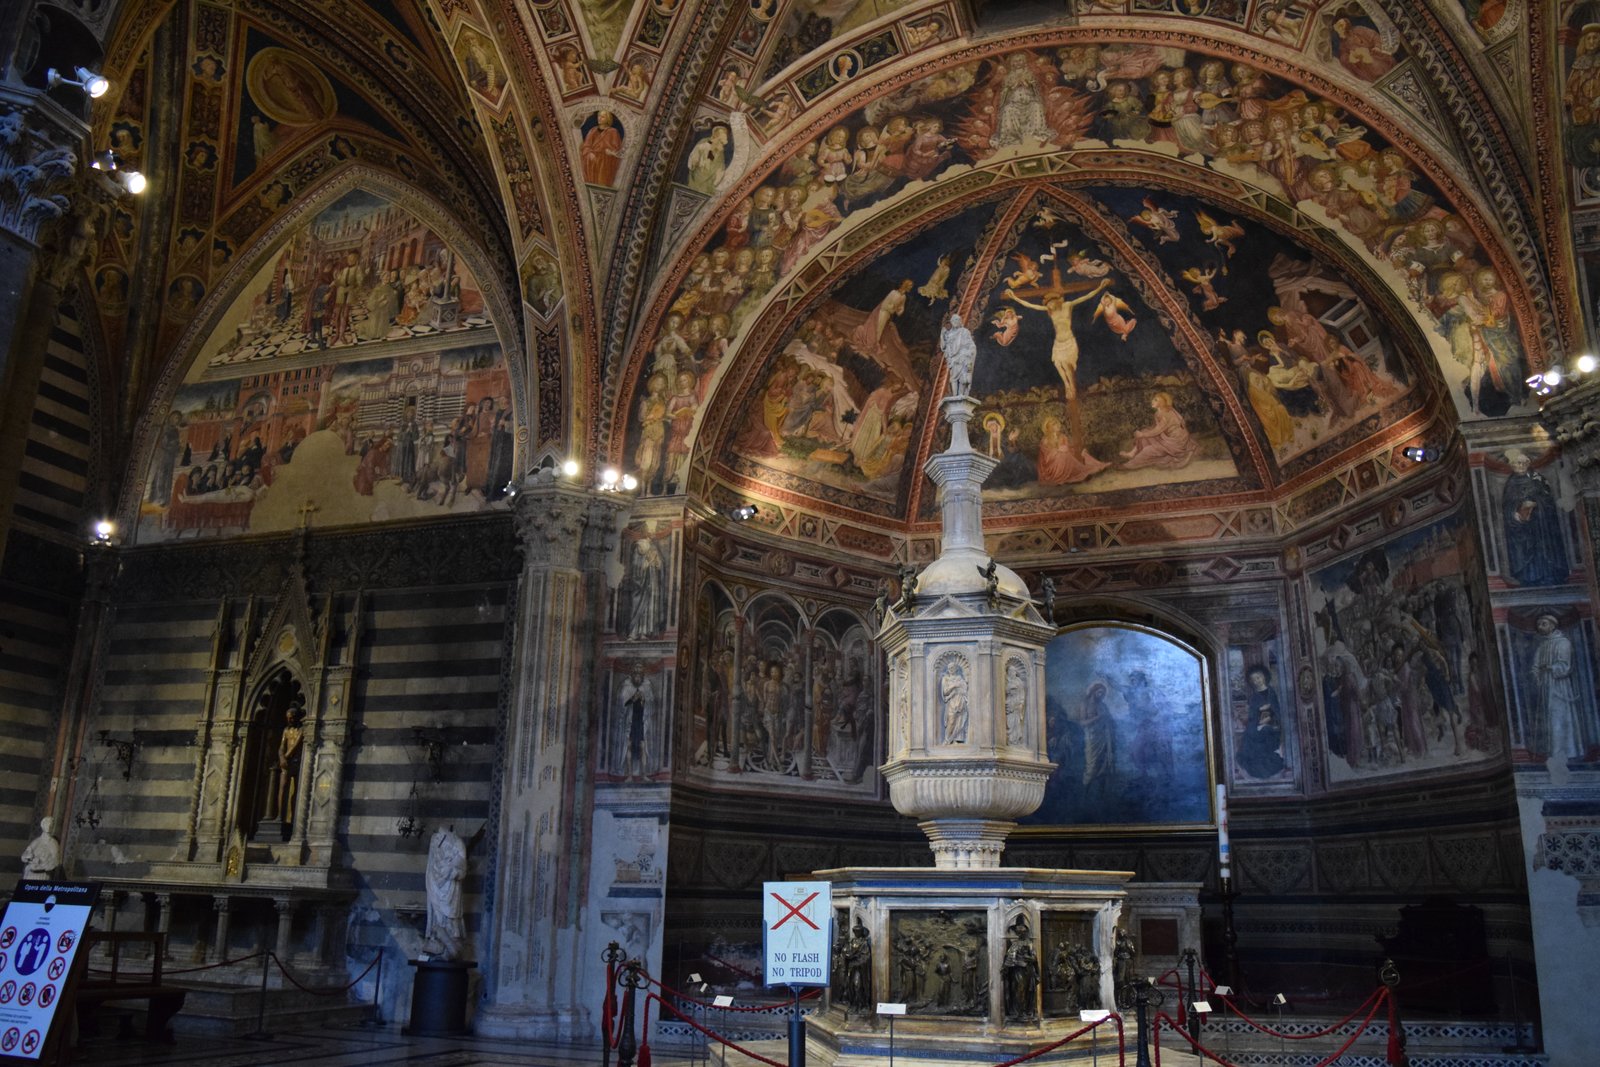 Inside the baptistery in Siena, Italy. ouritalianjourney.com